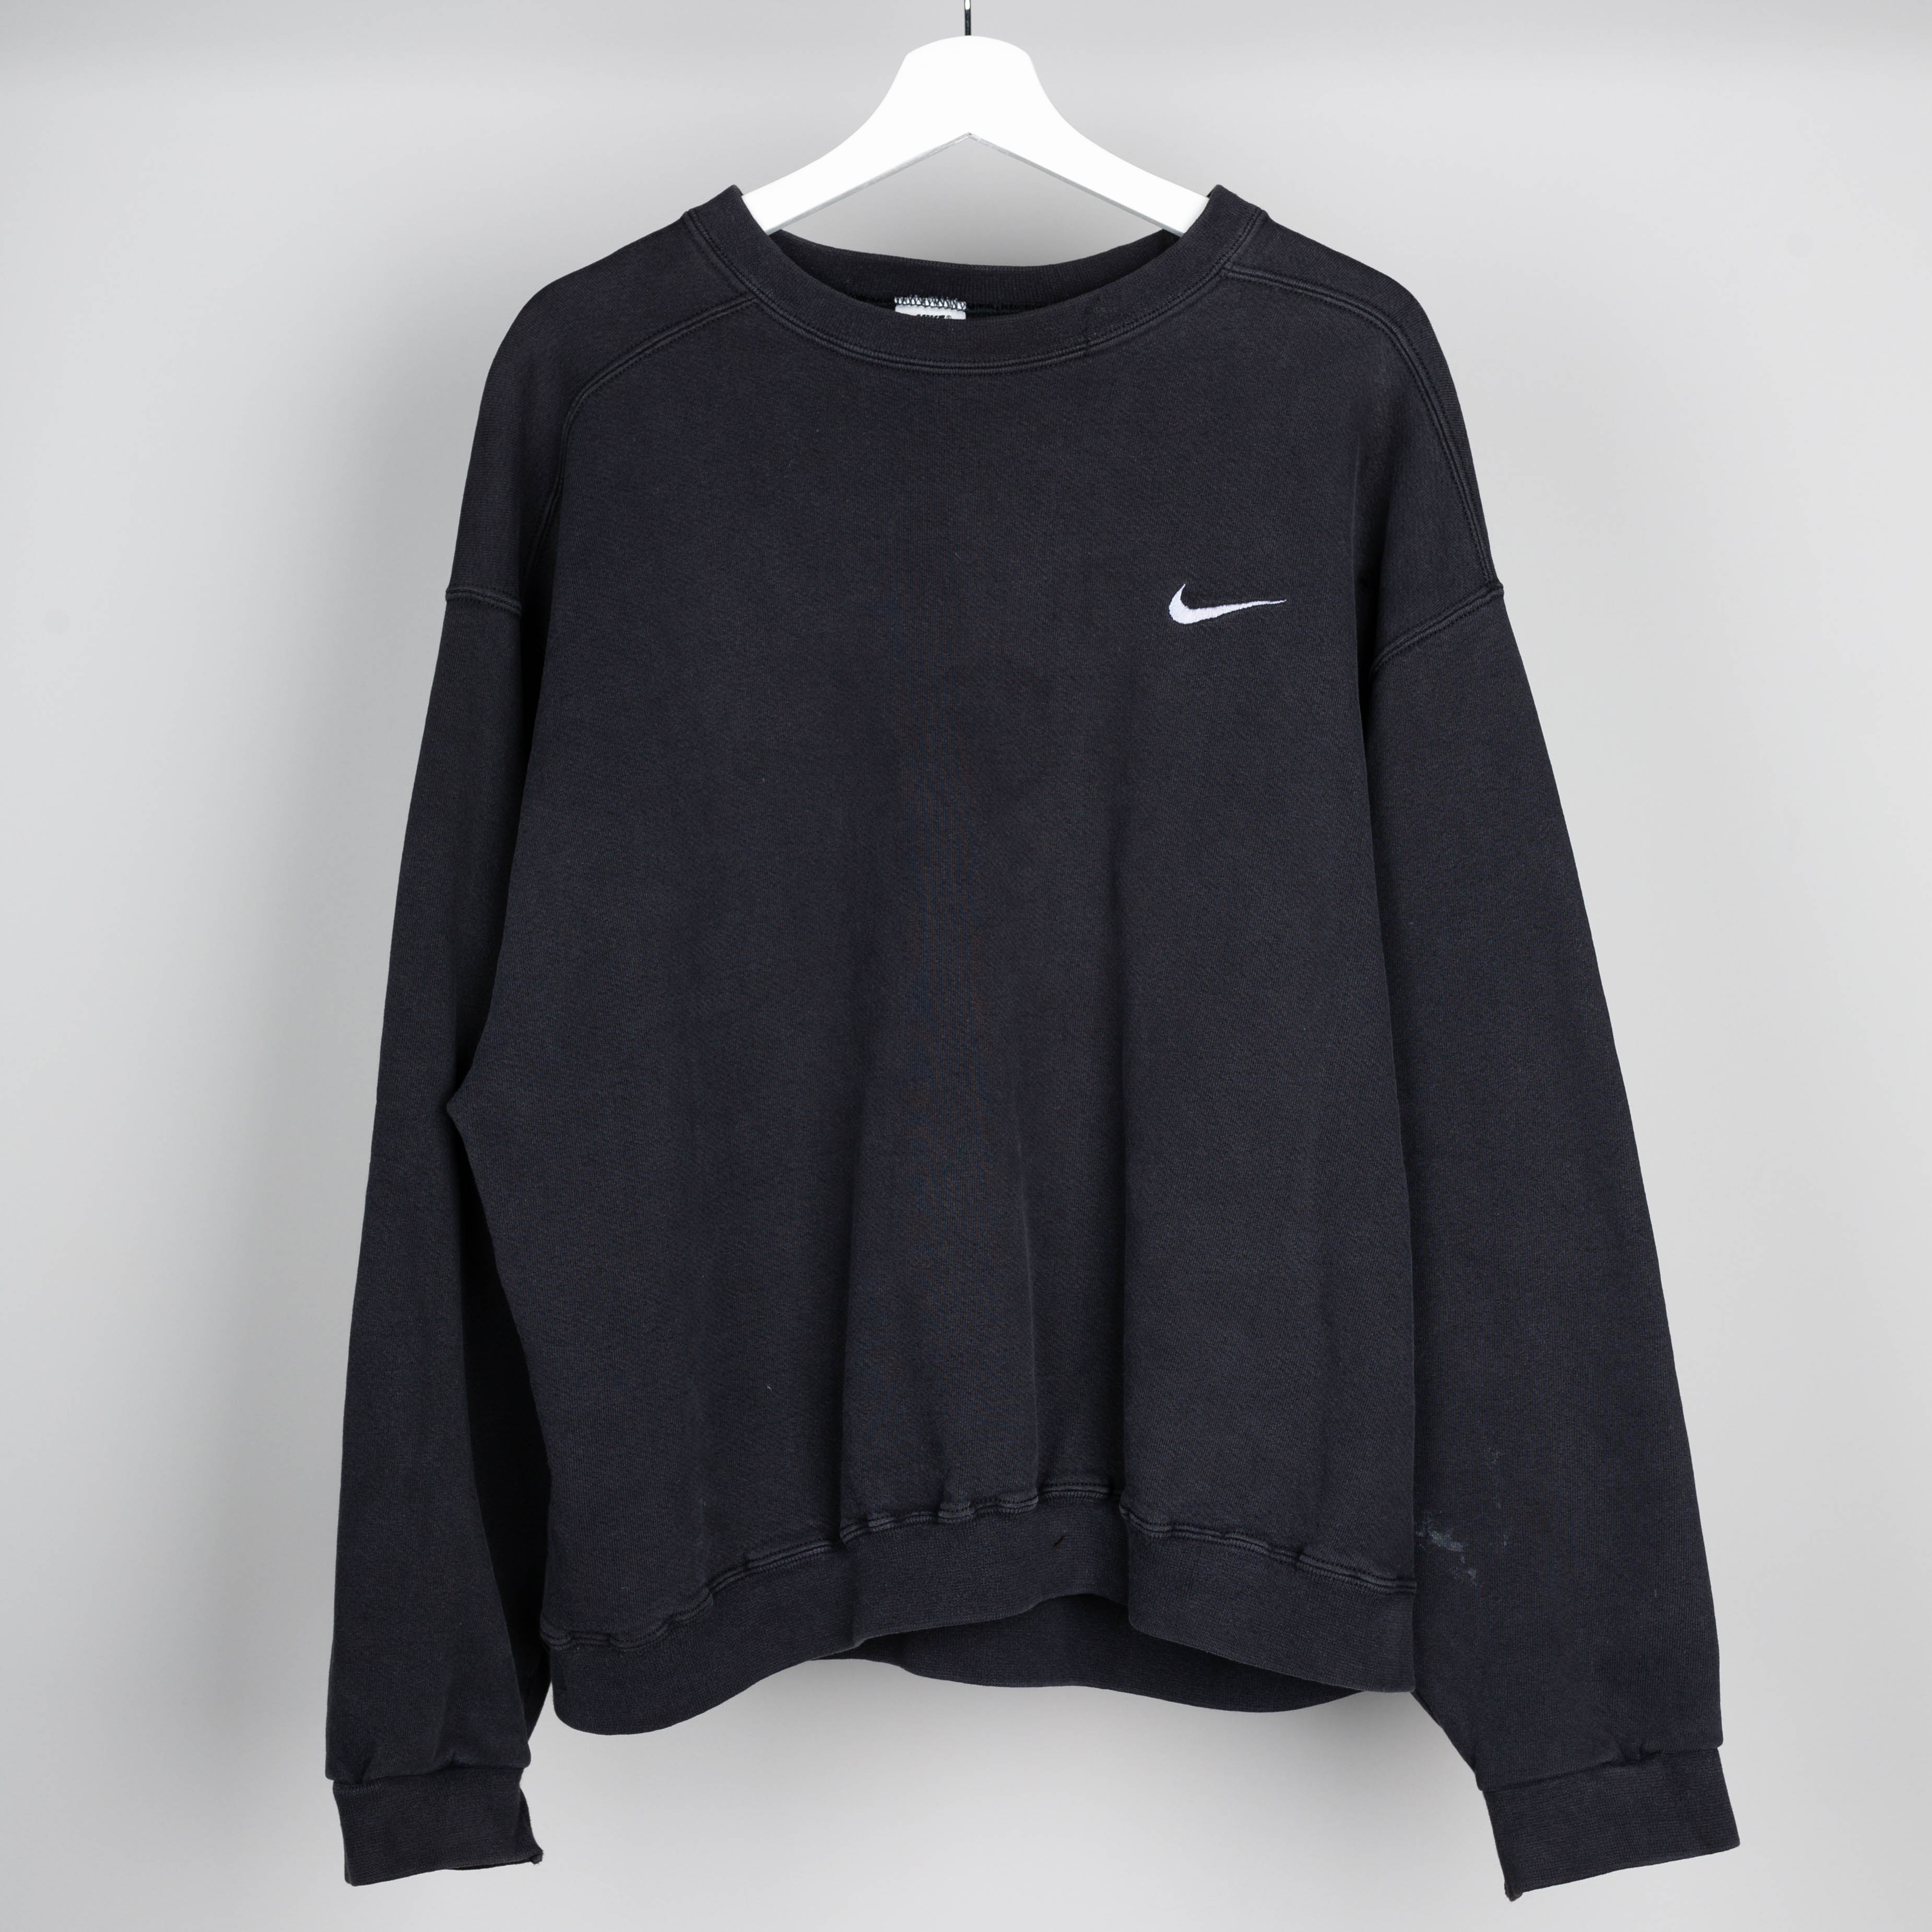 90's Black Nike Crewneck Sweater Size L